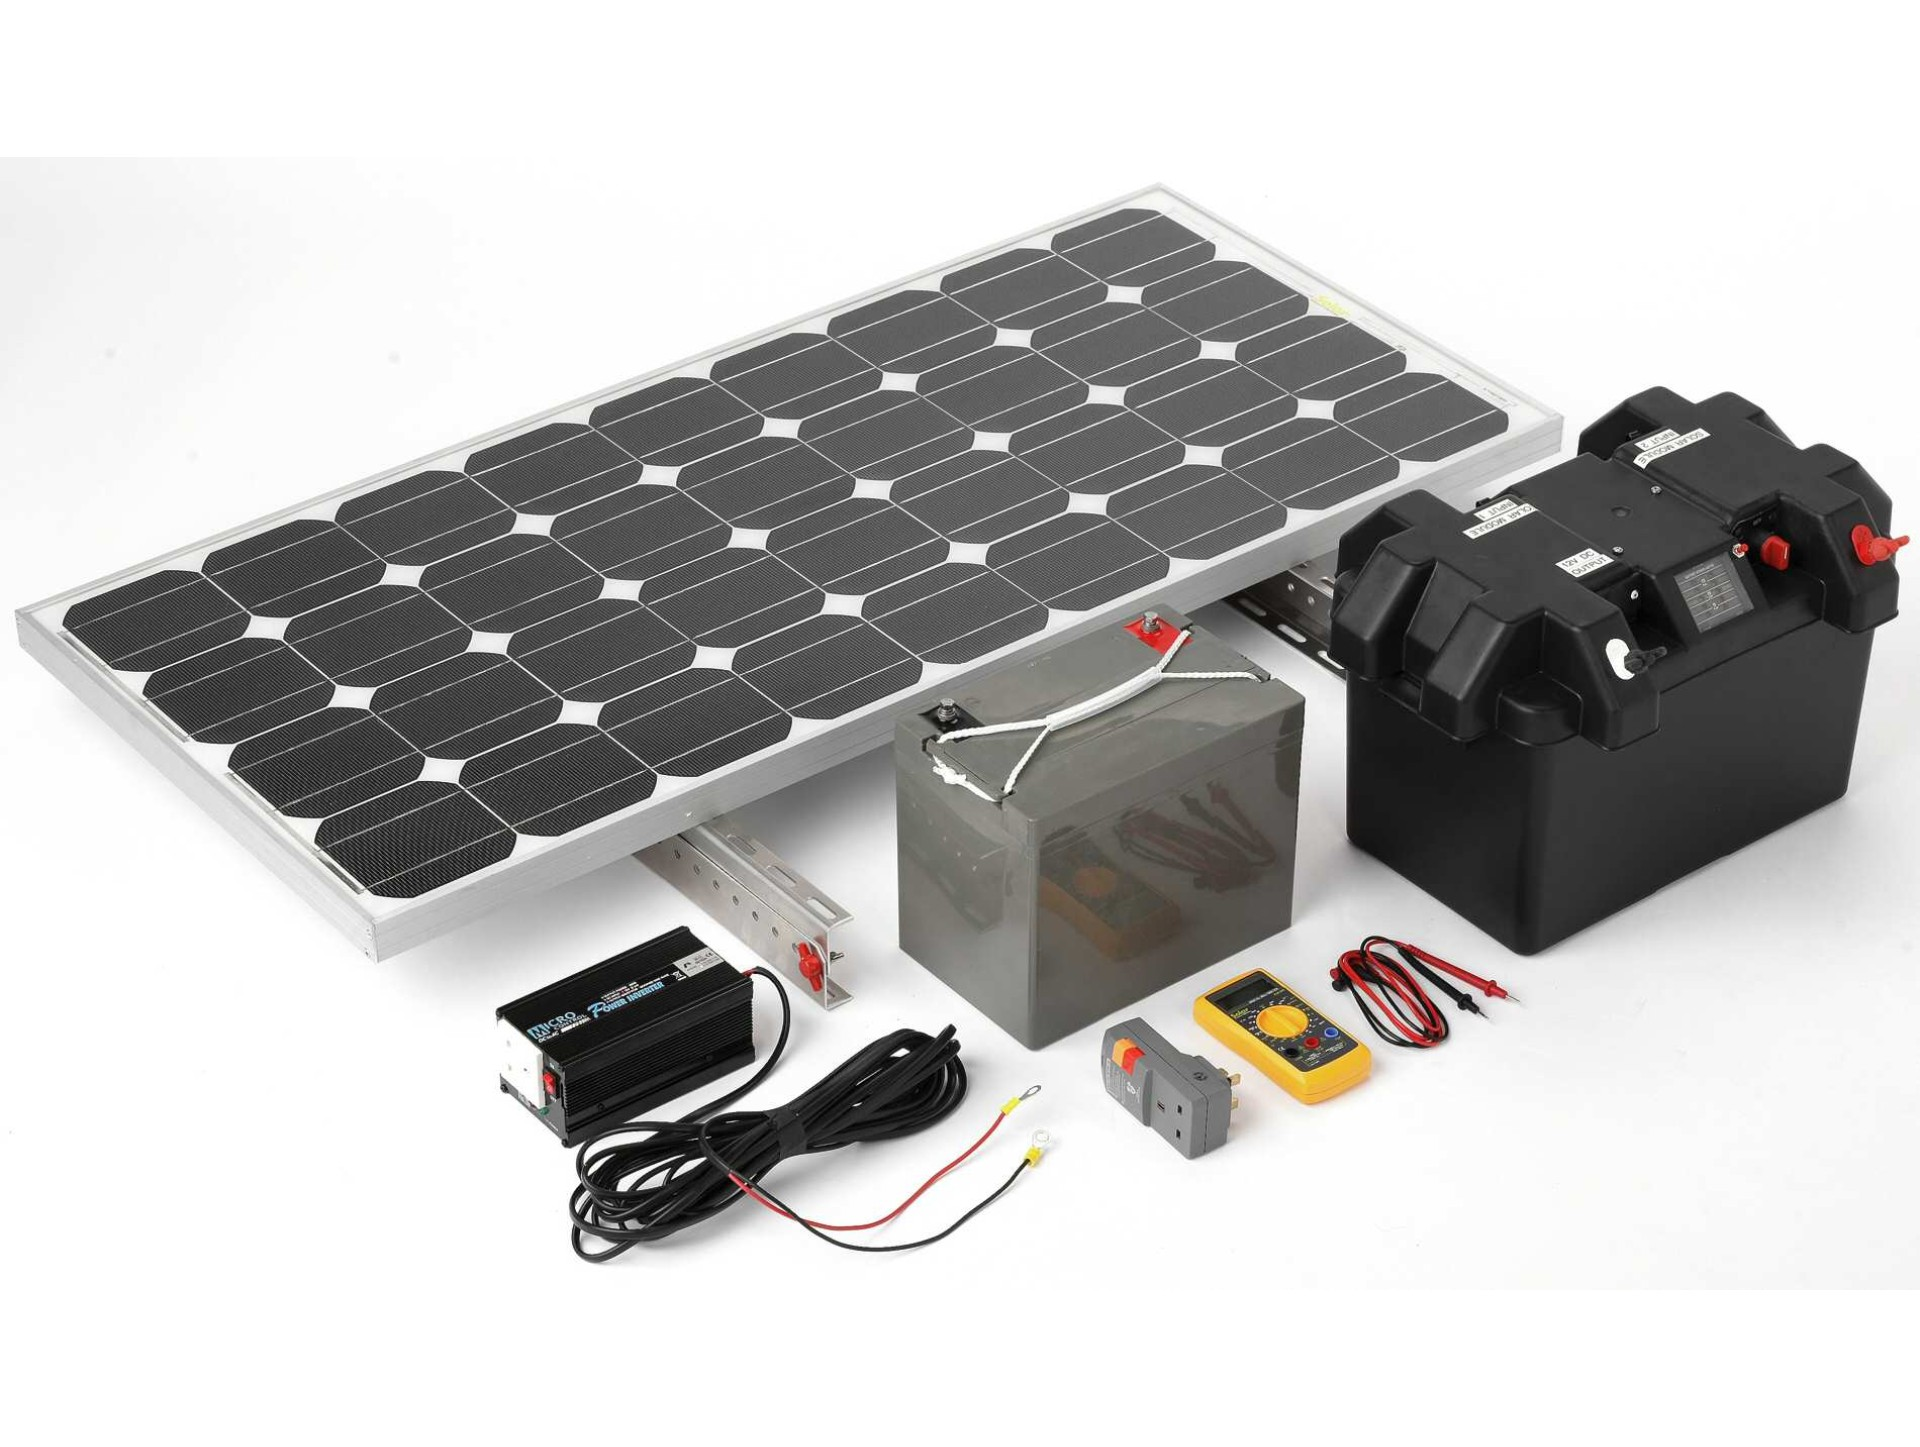 Комплект батарей для аккумулятора. Солнечные батарея Solar Panel. Солнечная электростанция Delta комплект. Солнечная панель Delta Solar. Солнечная панель Jarret Solar 150 Watt.